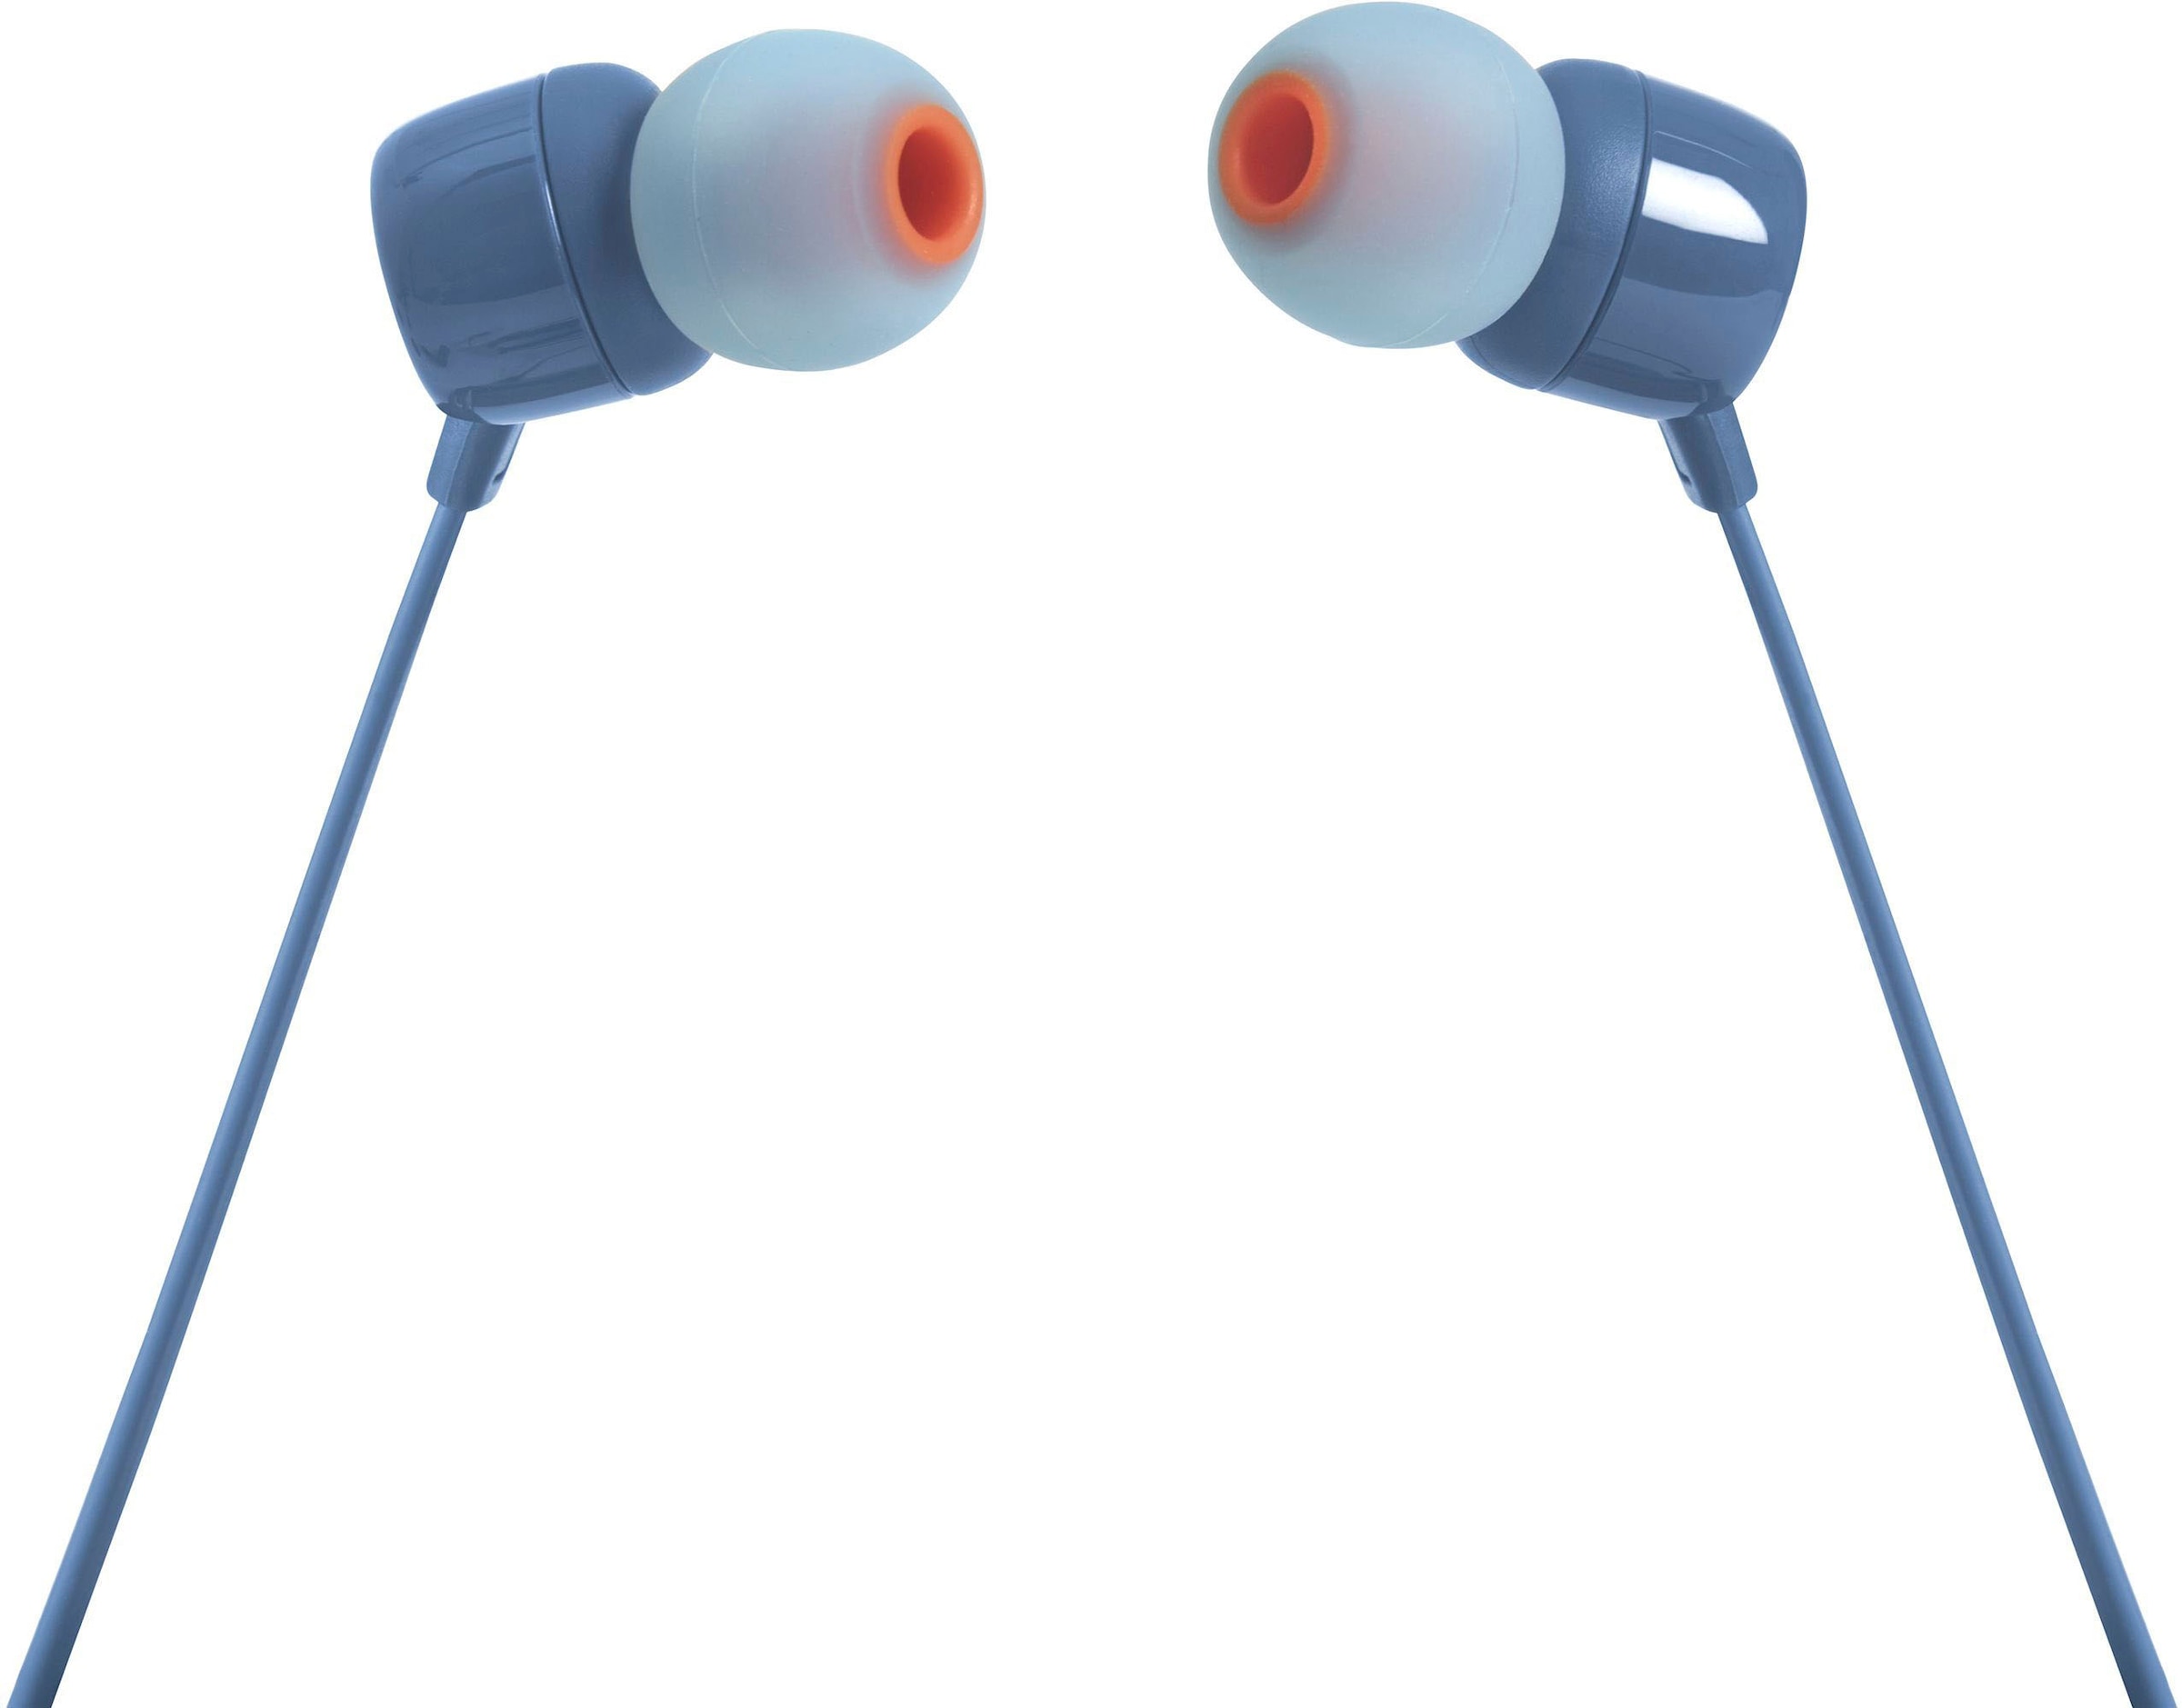 In-Ear-Kopfhörer bei JBL jetzt OTTO kaufen »T110«